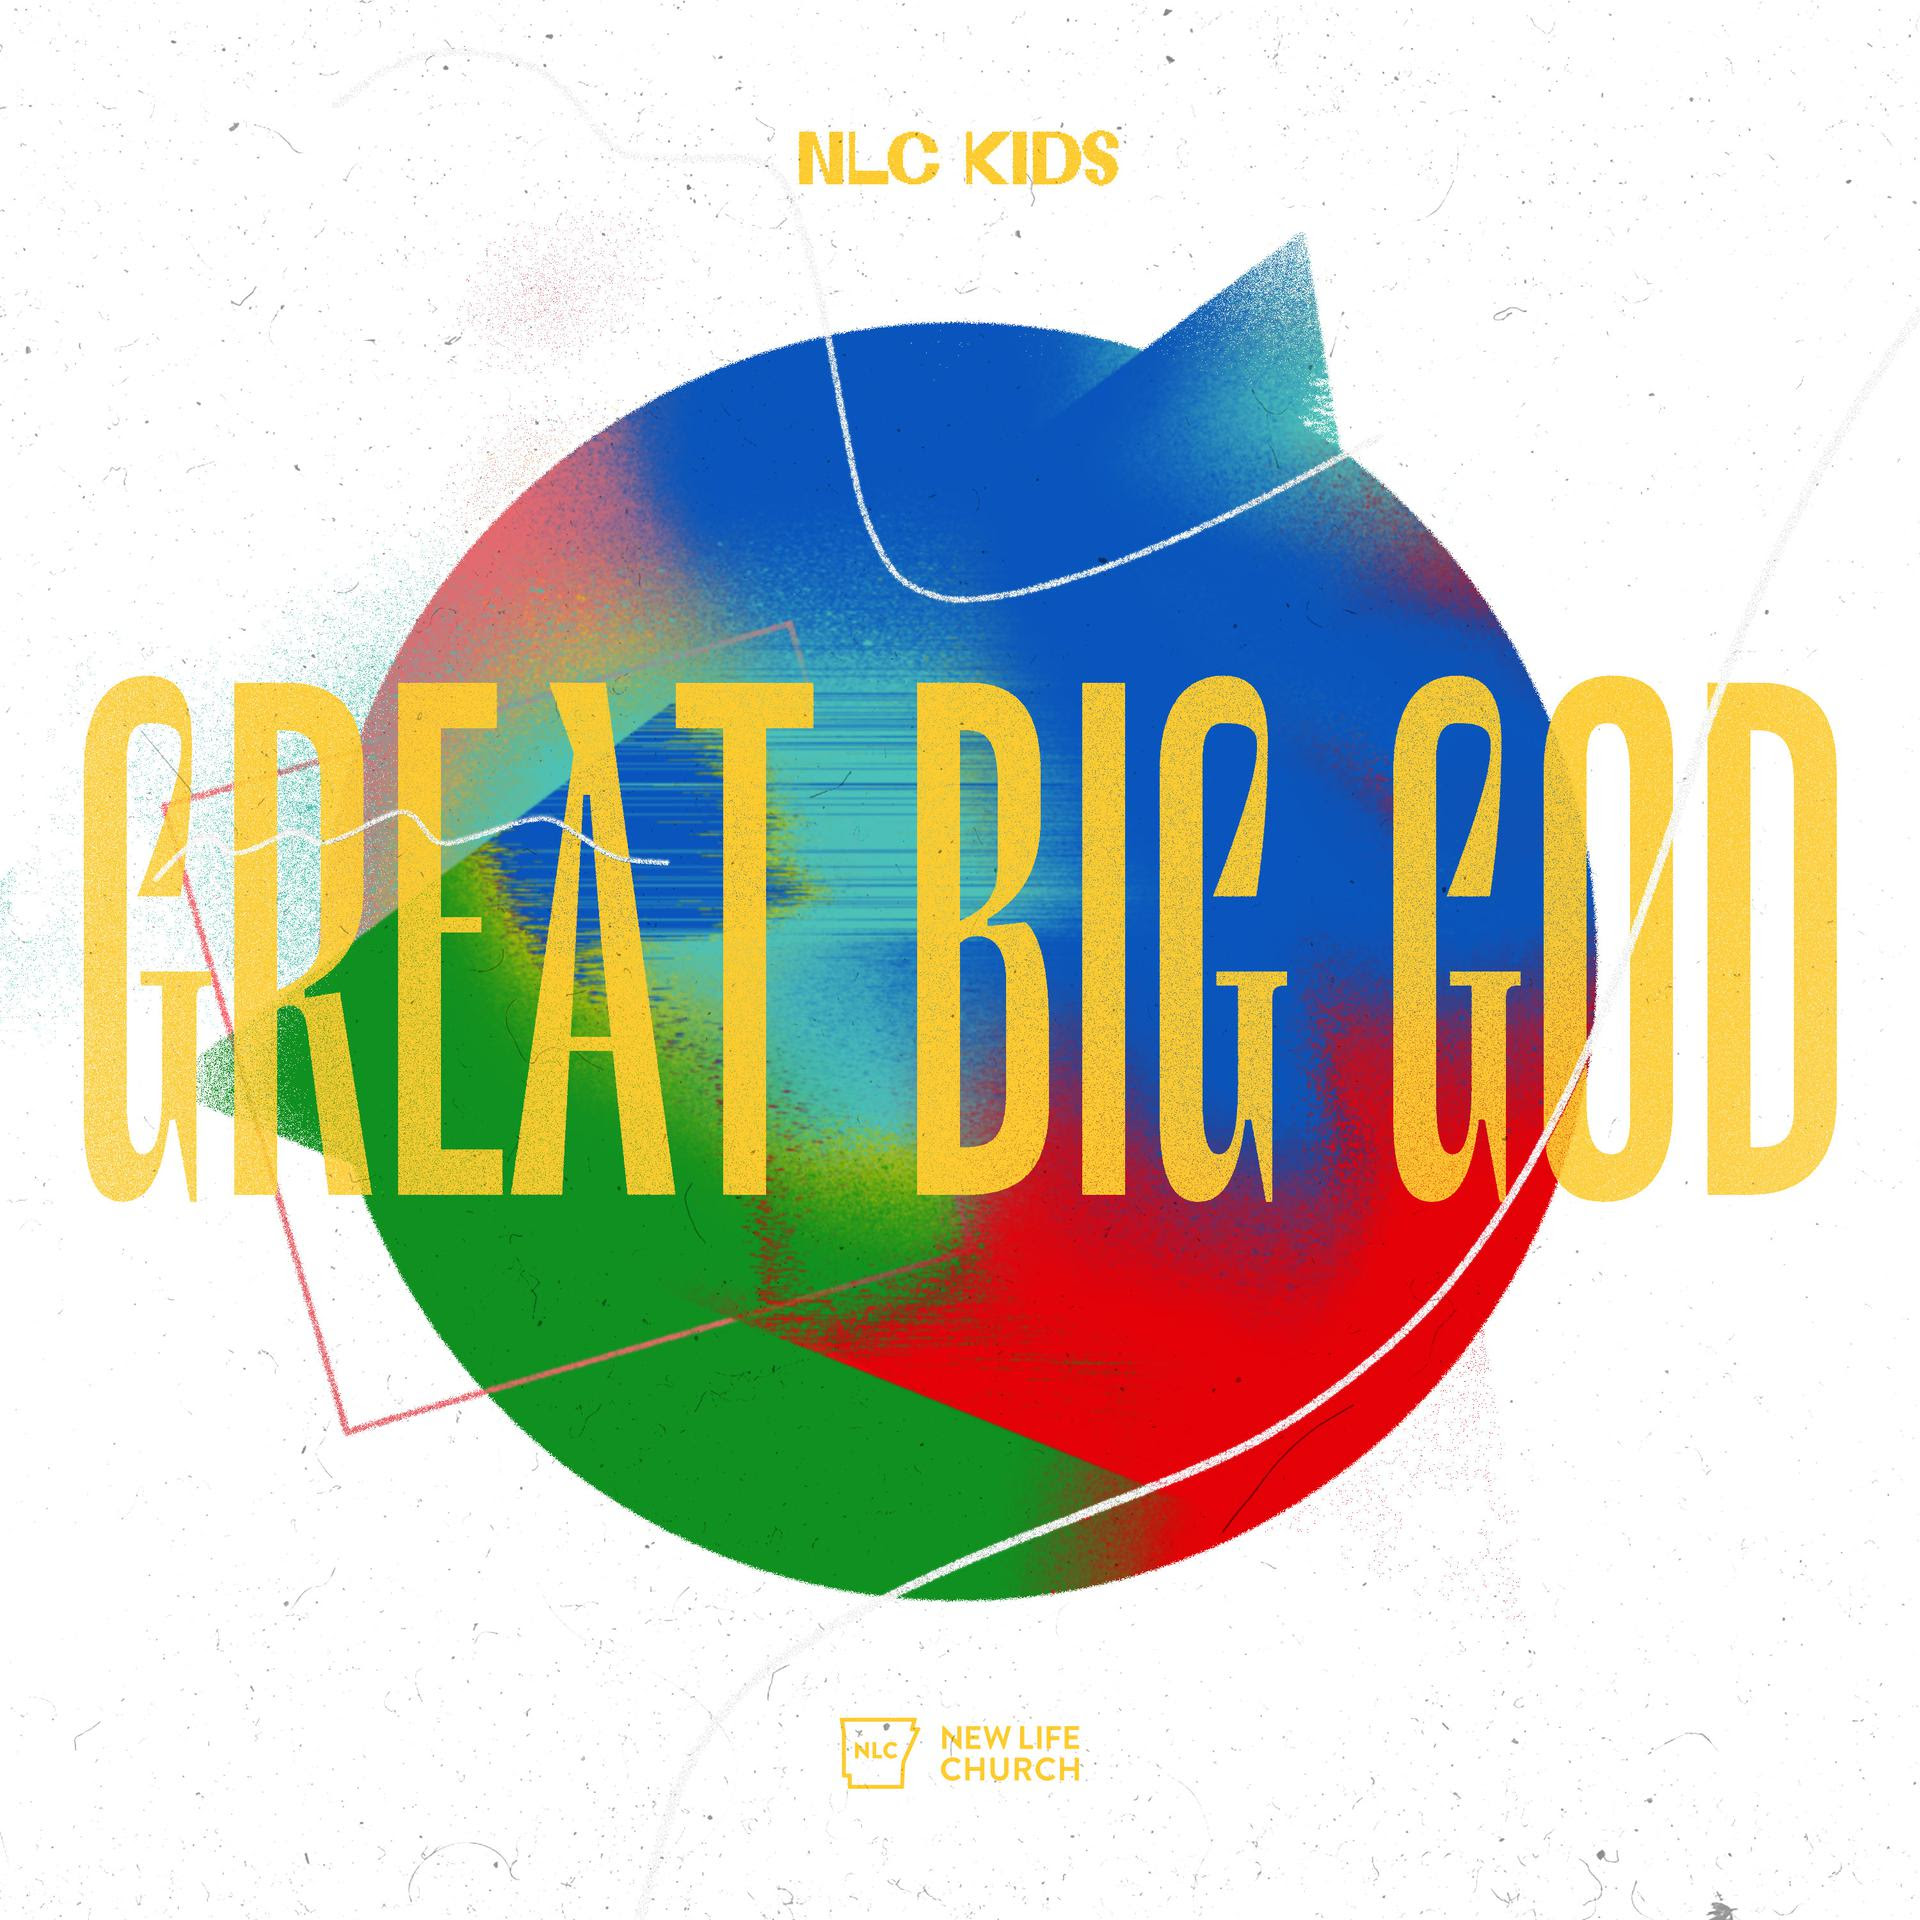 Great Big God - NLC Kids Album